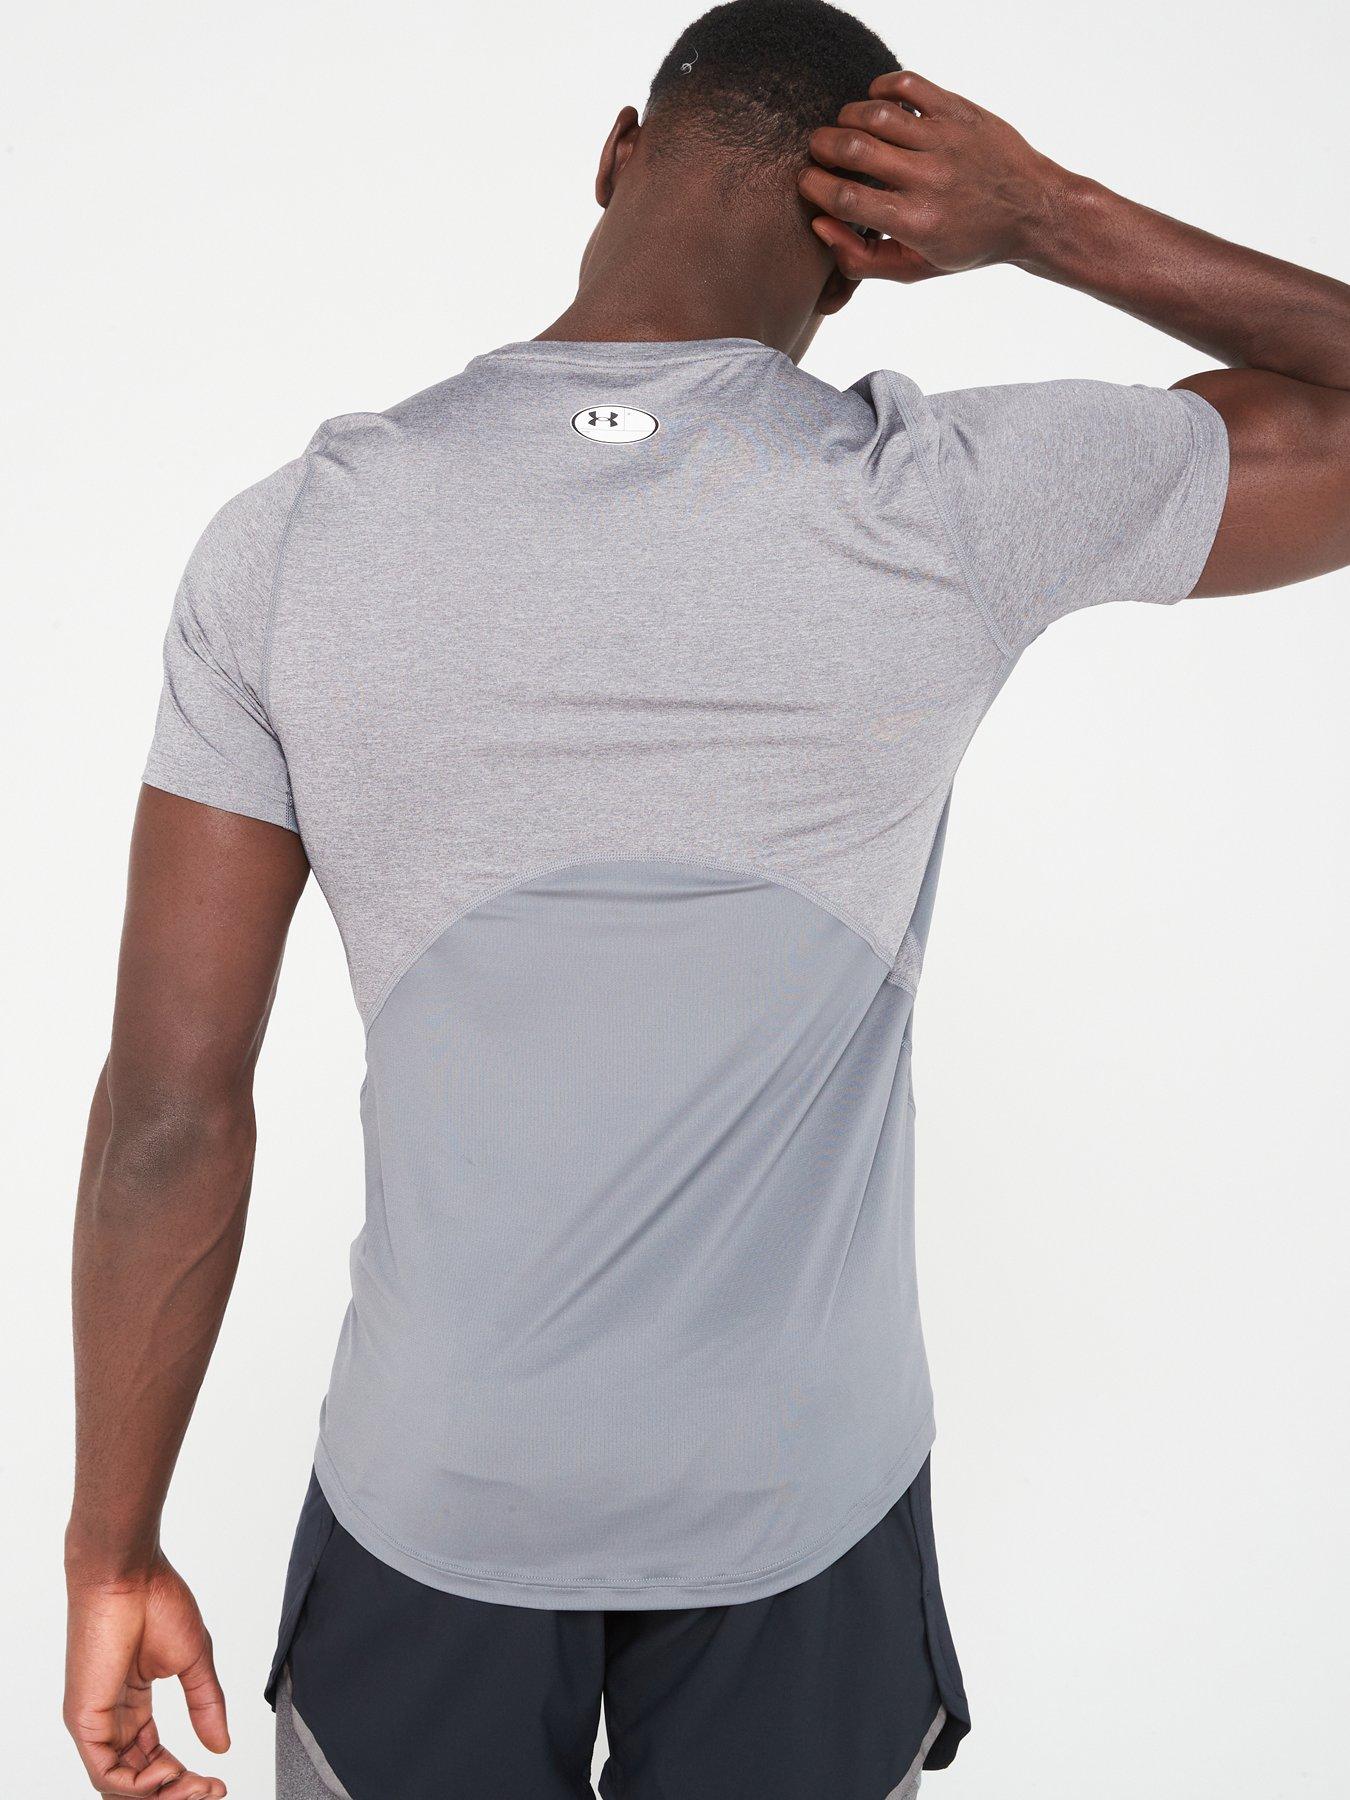 Under Armour Heat Gear Armour Fitted Short Sleeve T-shirt - Men's